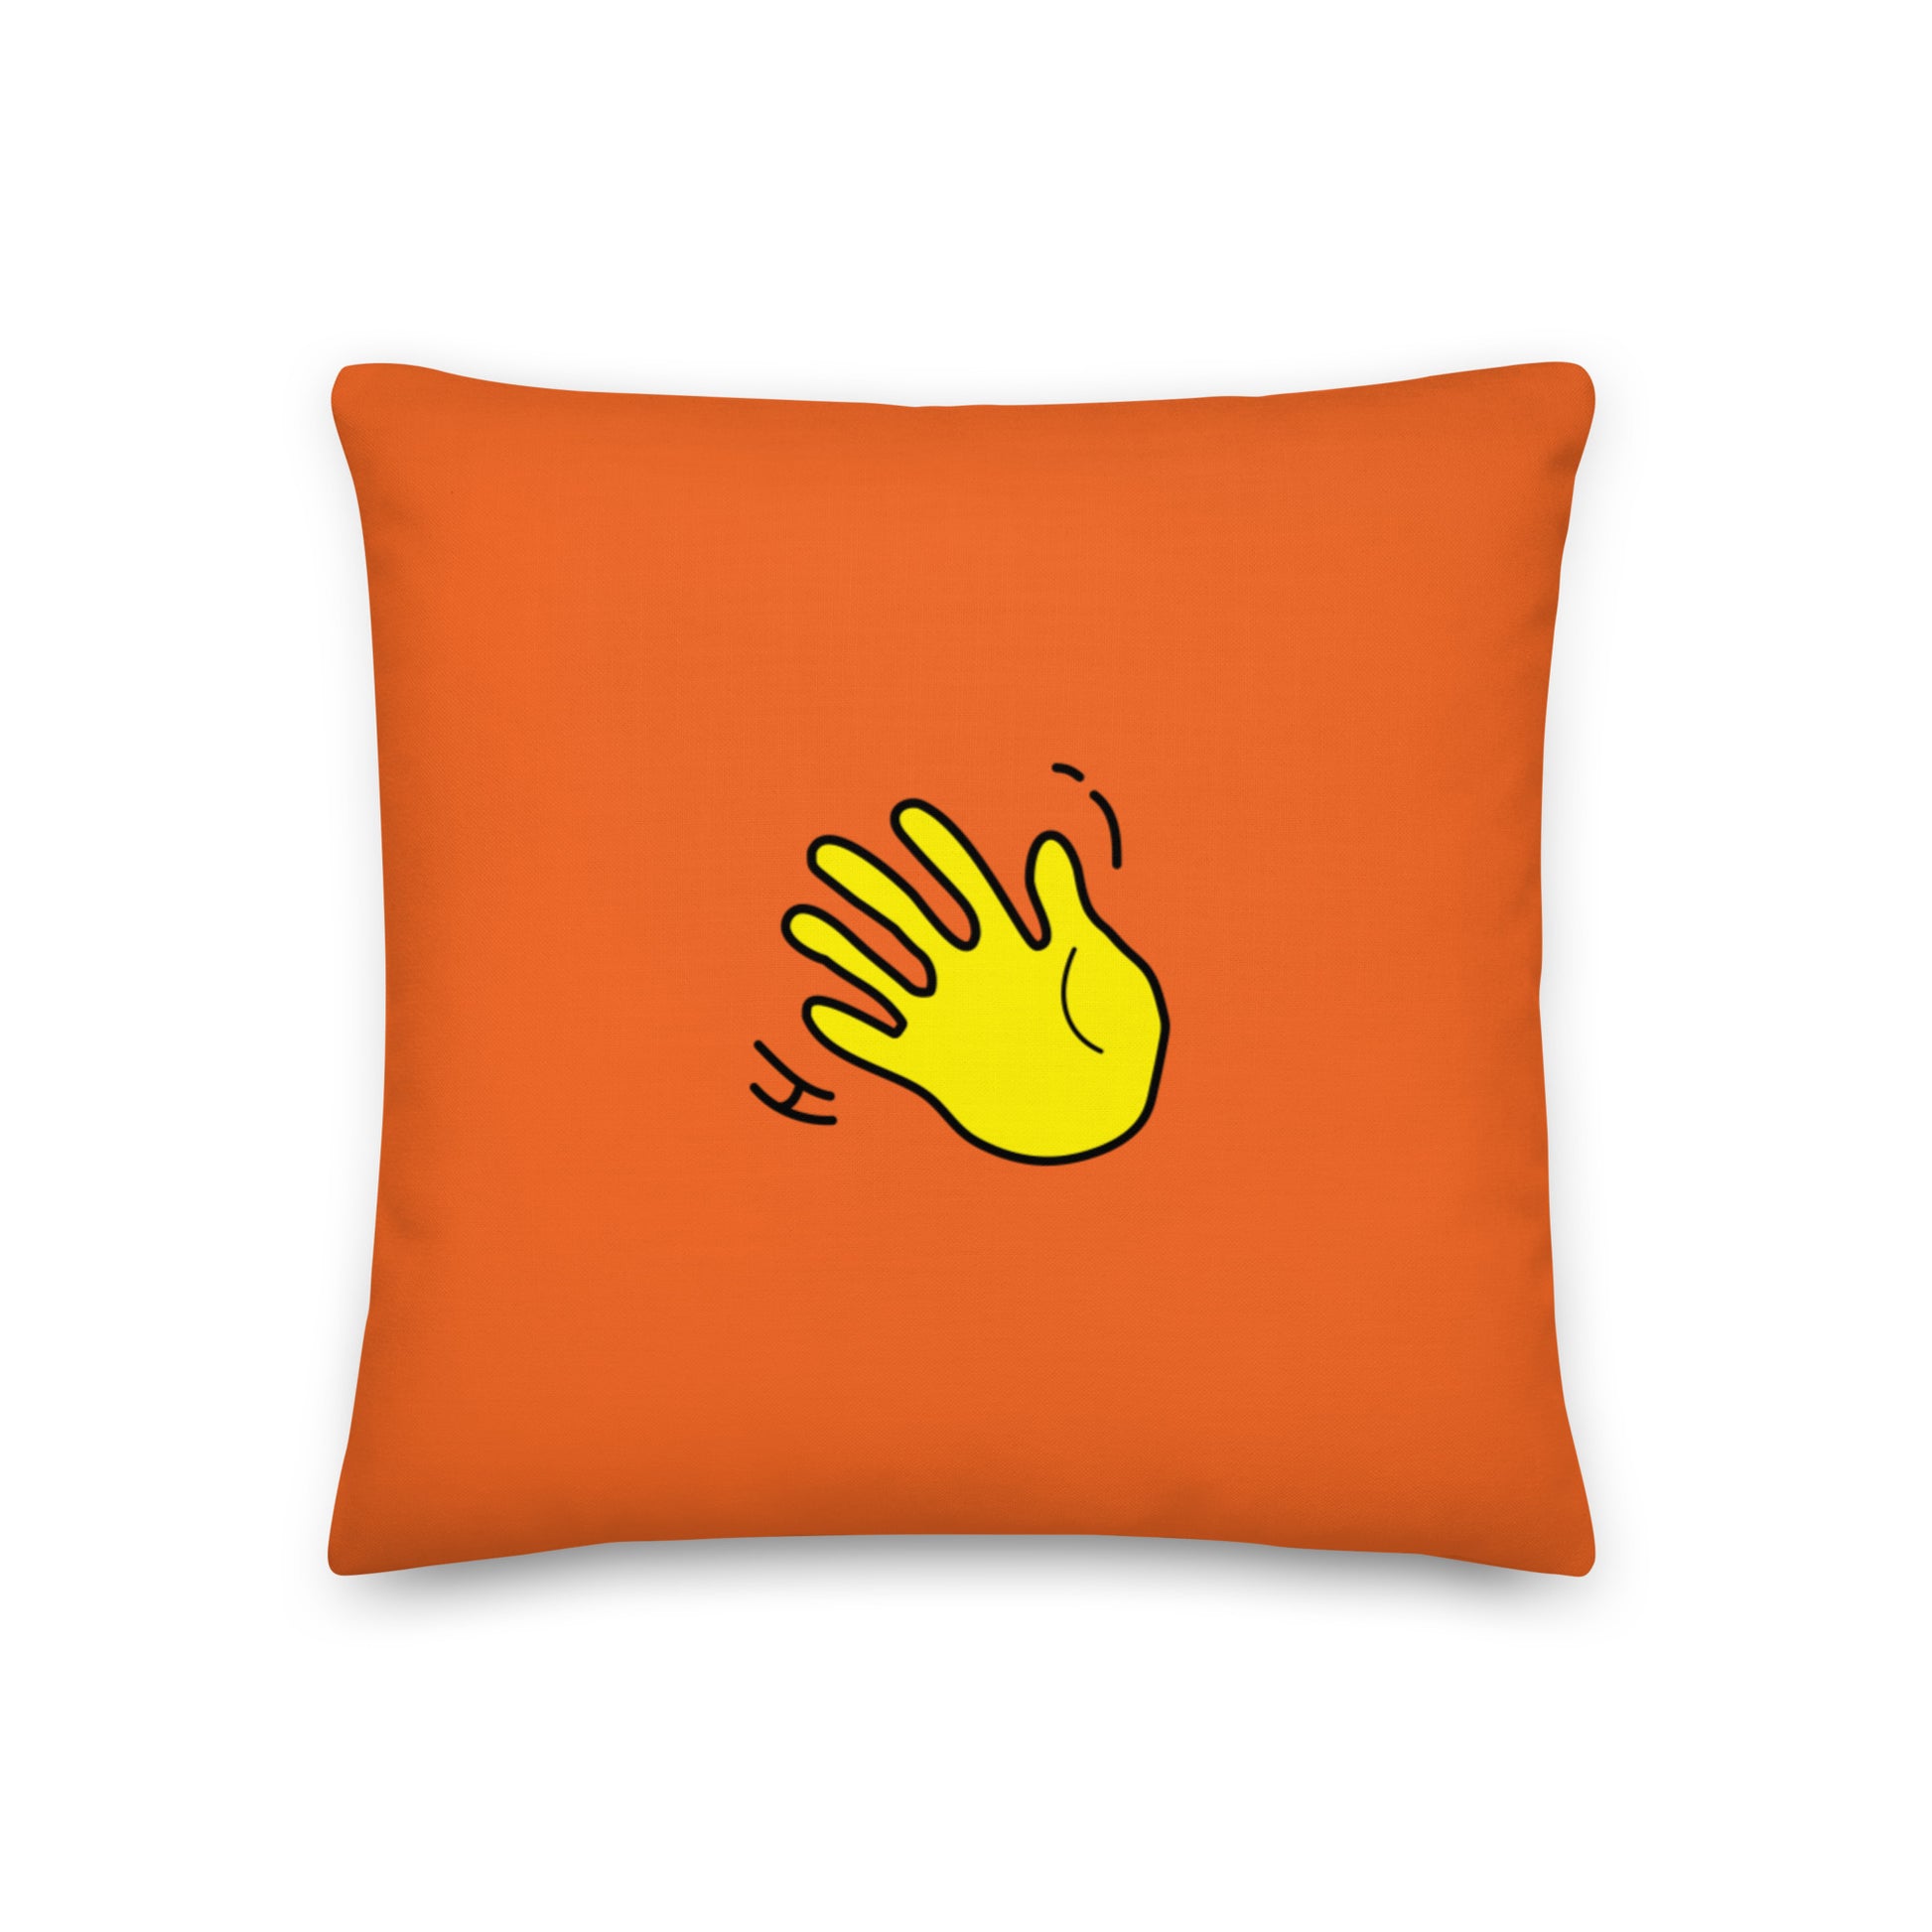 Hi Pillow in orange with Hi emoji by HiJohnny.com